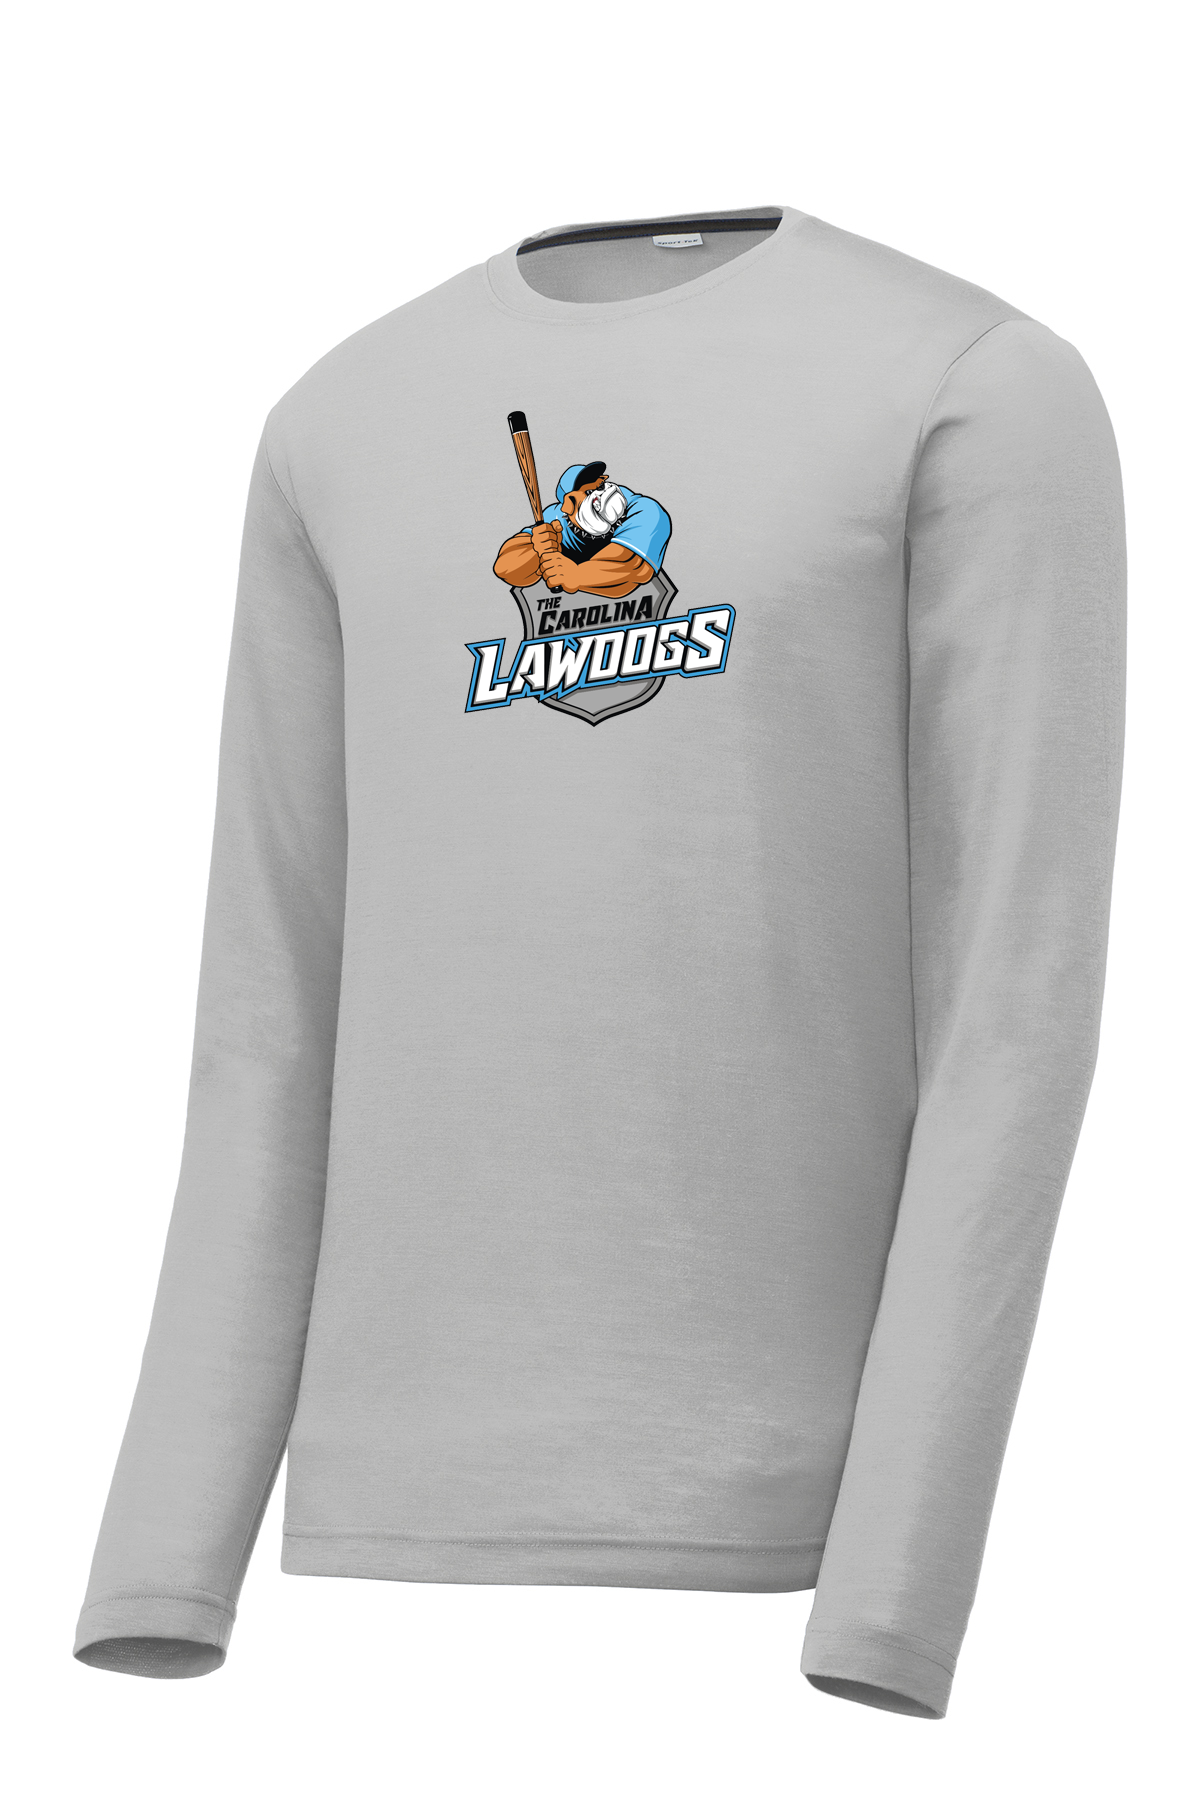 Lawdogs Baseball Long Sleeve CottonTouch Performance Shirt